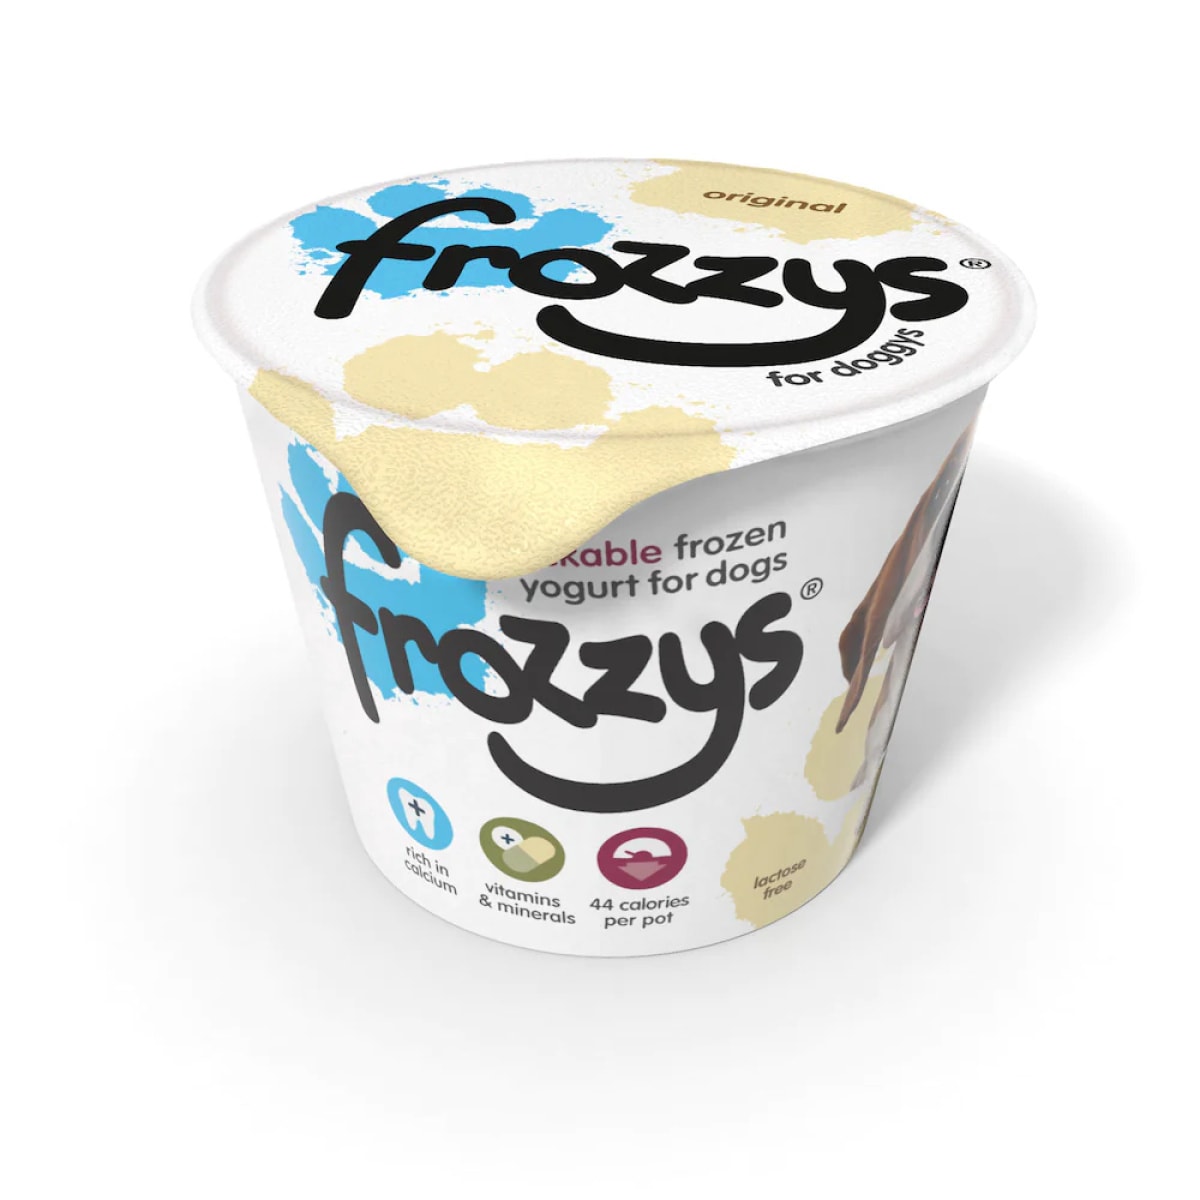 Frozzys Frozen Yogurt - Original Main Image